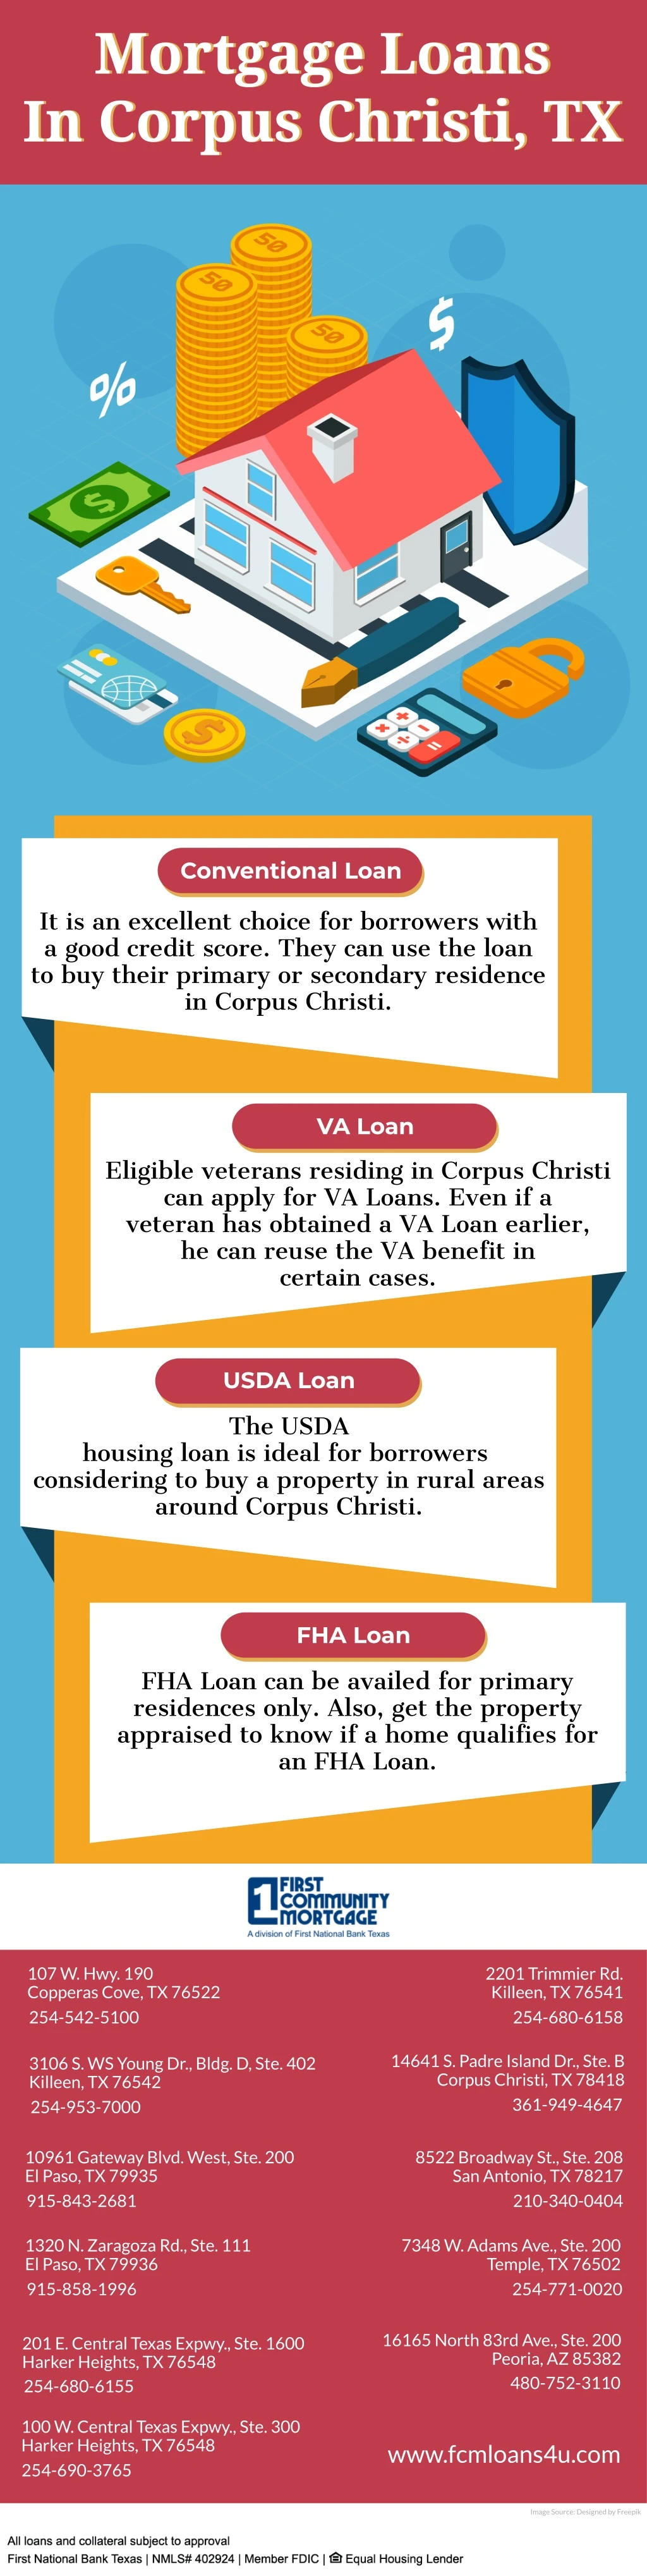 mortgage loans in corpus christi tx in corpus